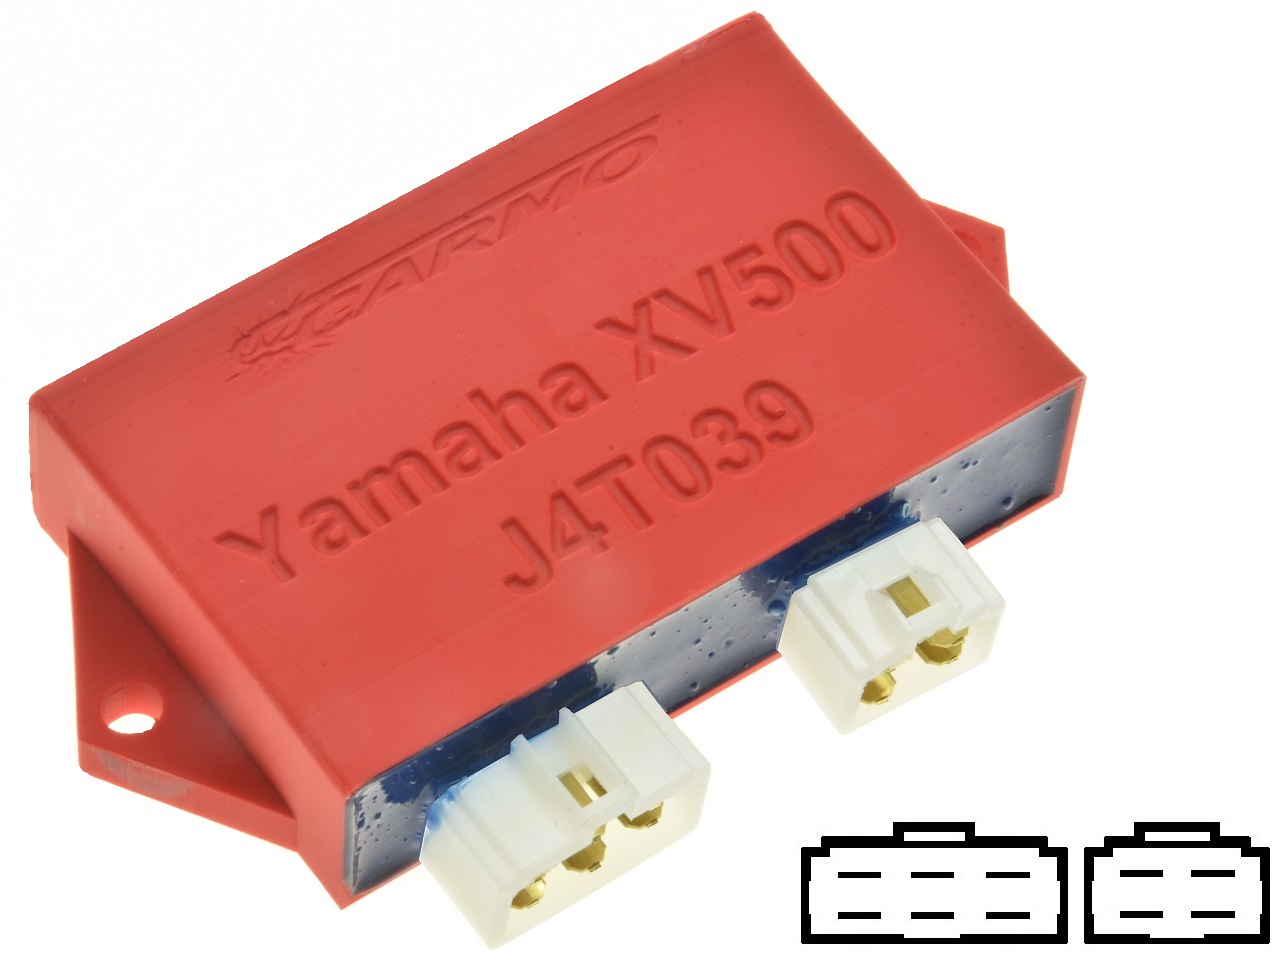 Yamaha XV500 Virago igniter ignition module CDI TCI Box (J4T039, 4FT-00) - Clique na Imagem para Fechar